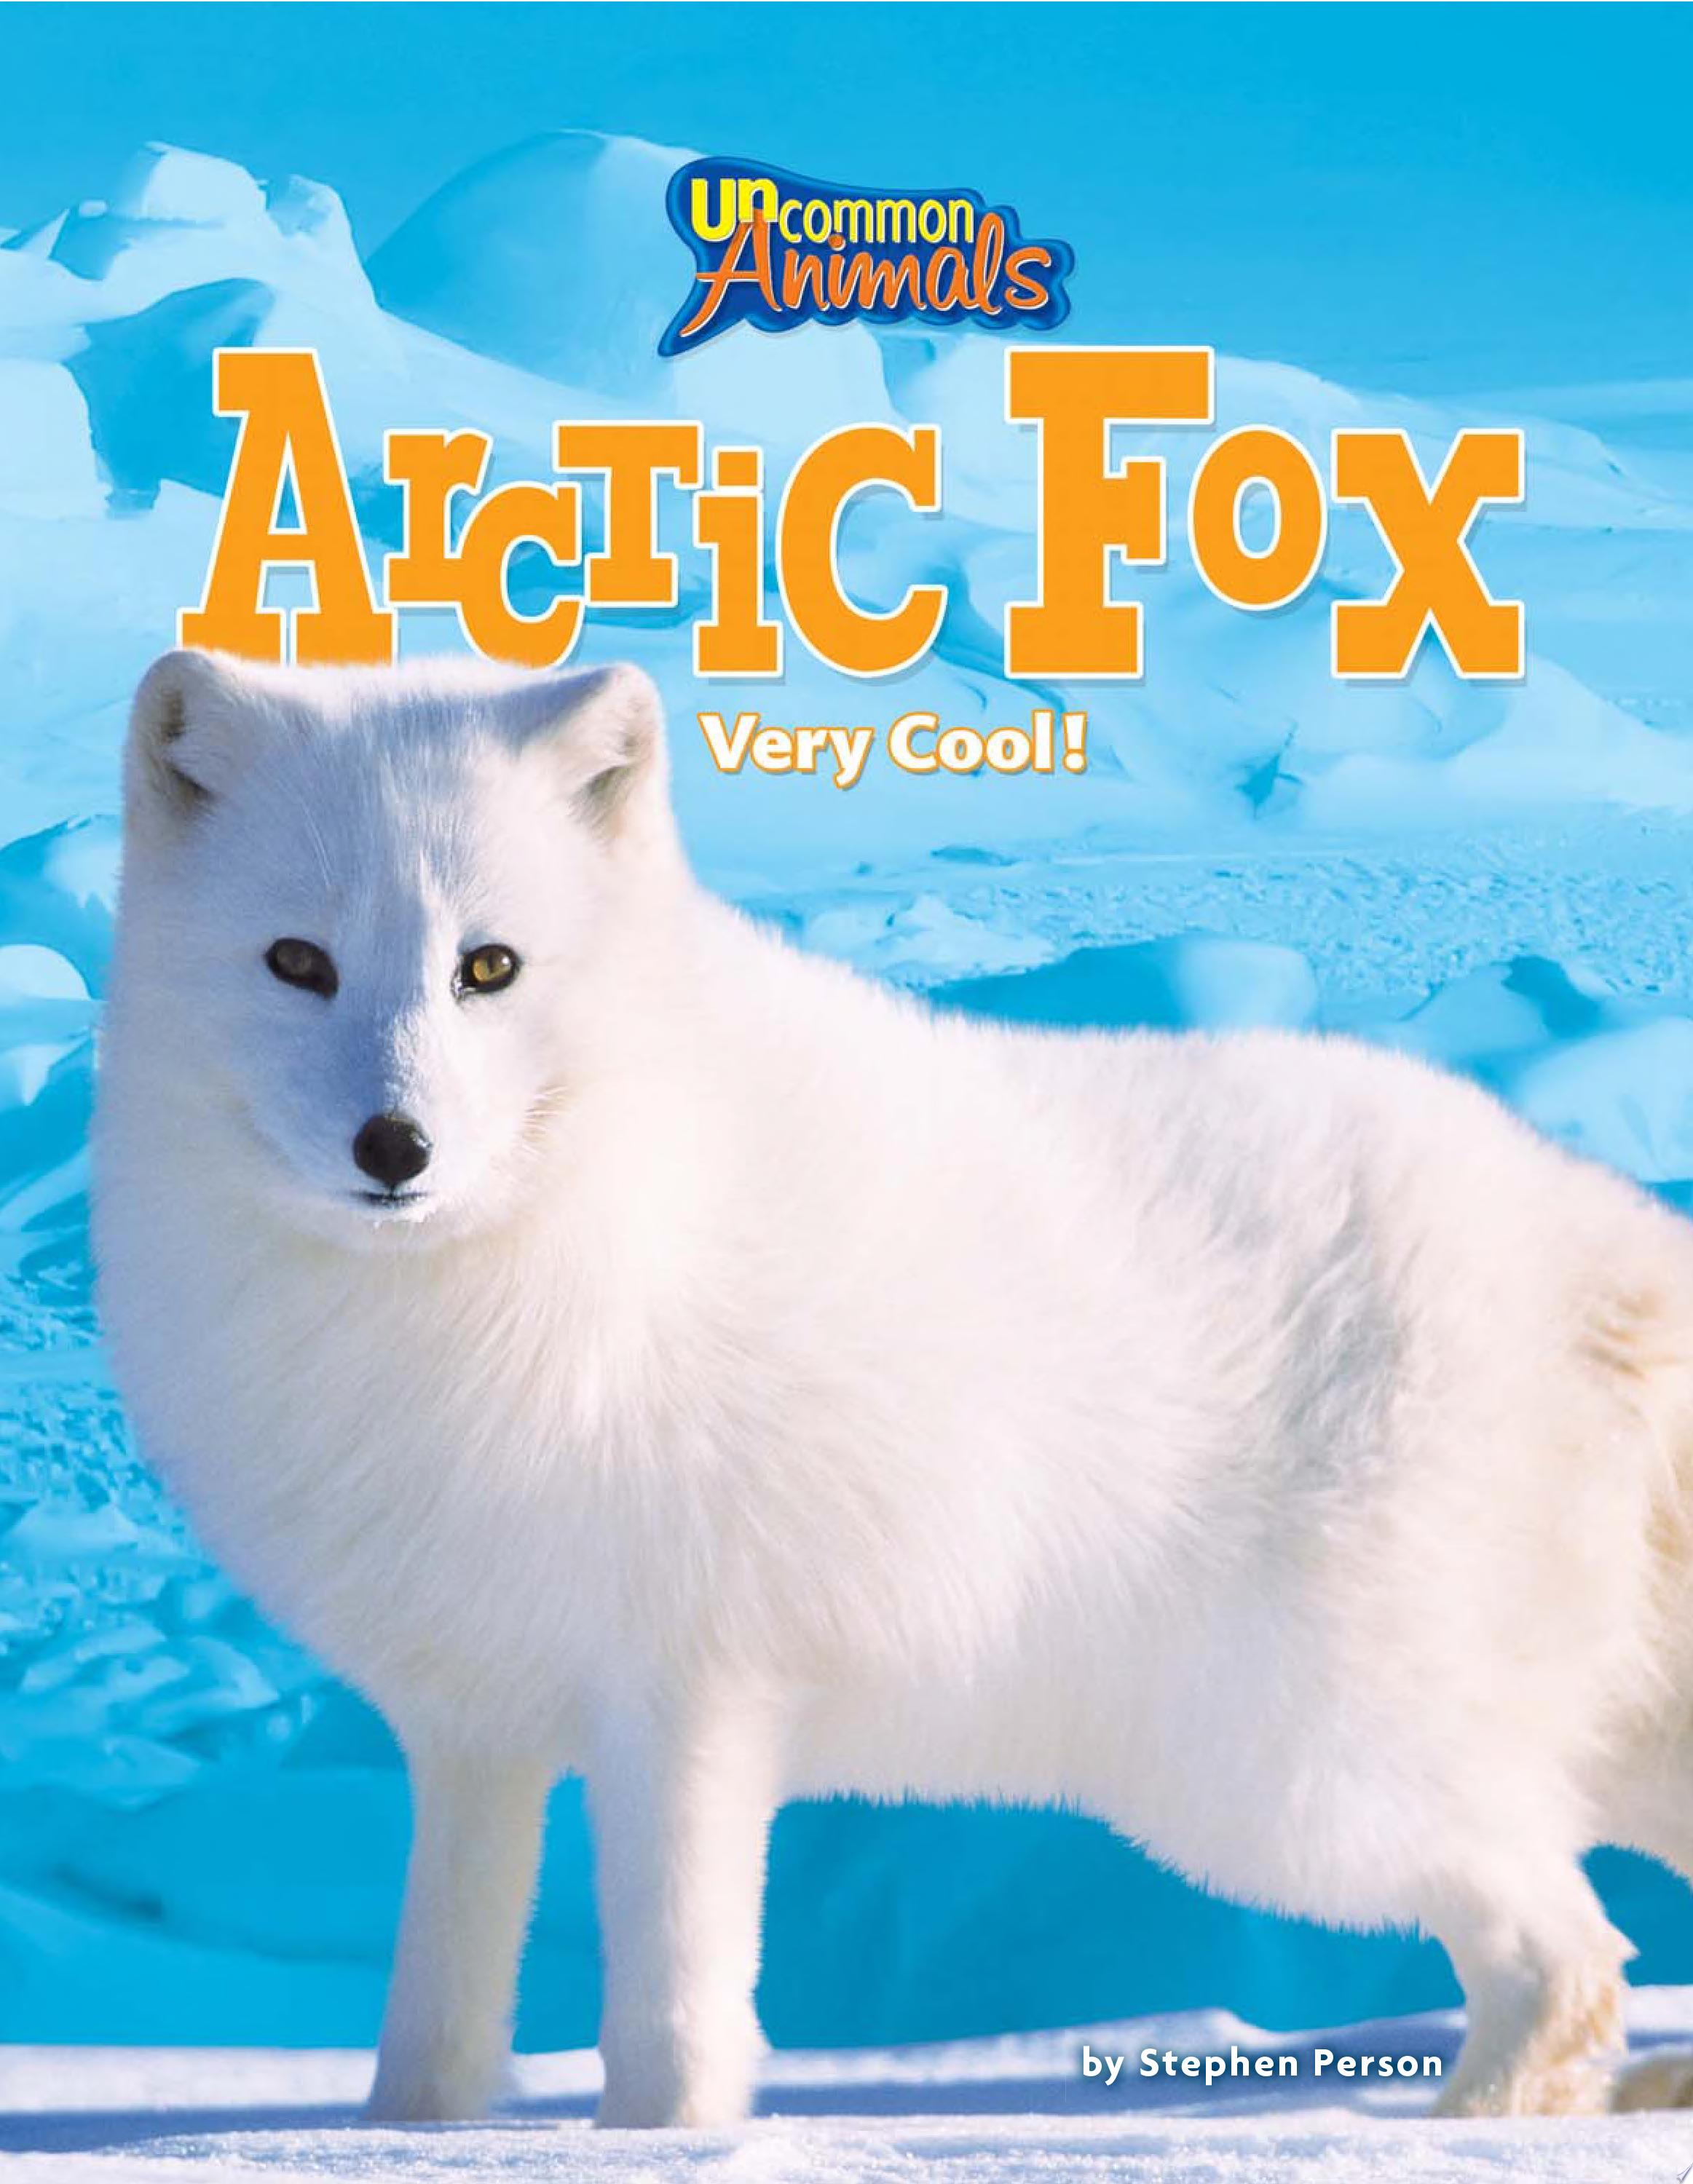 Image for "Arctic Fox"